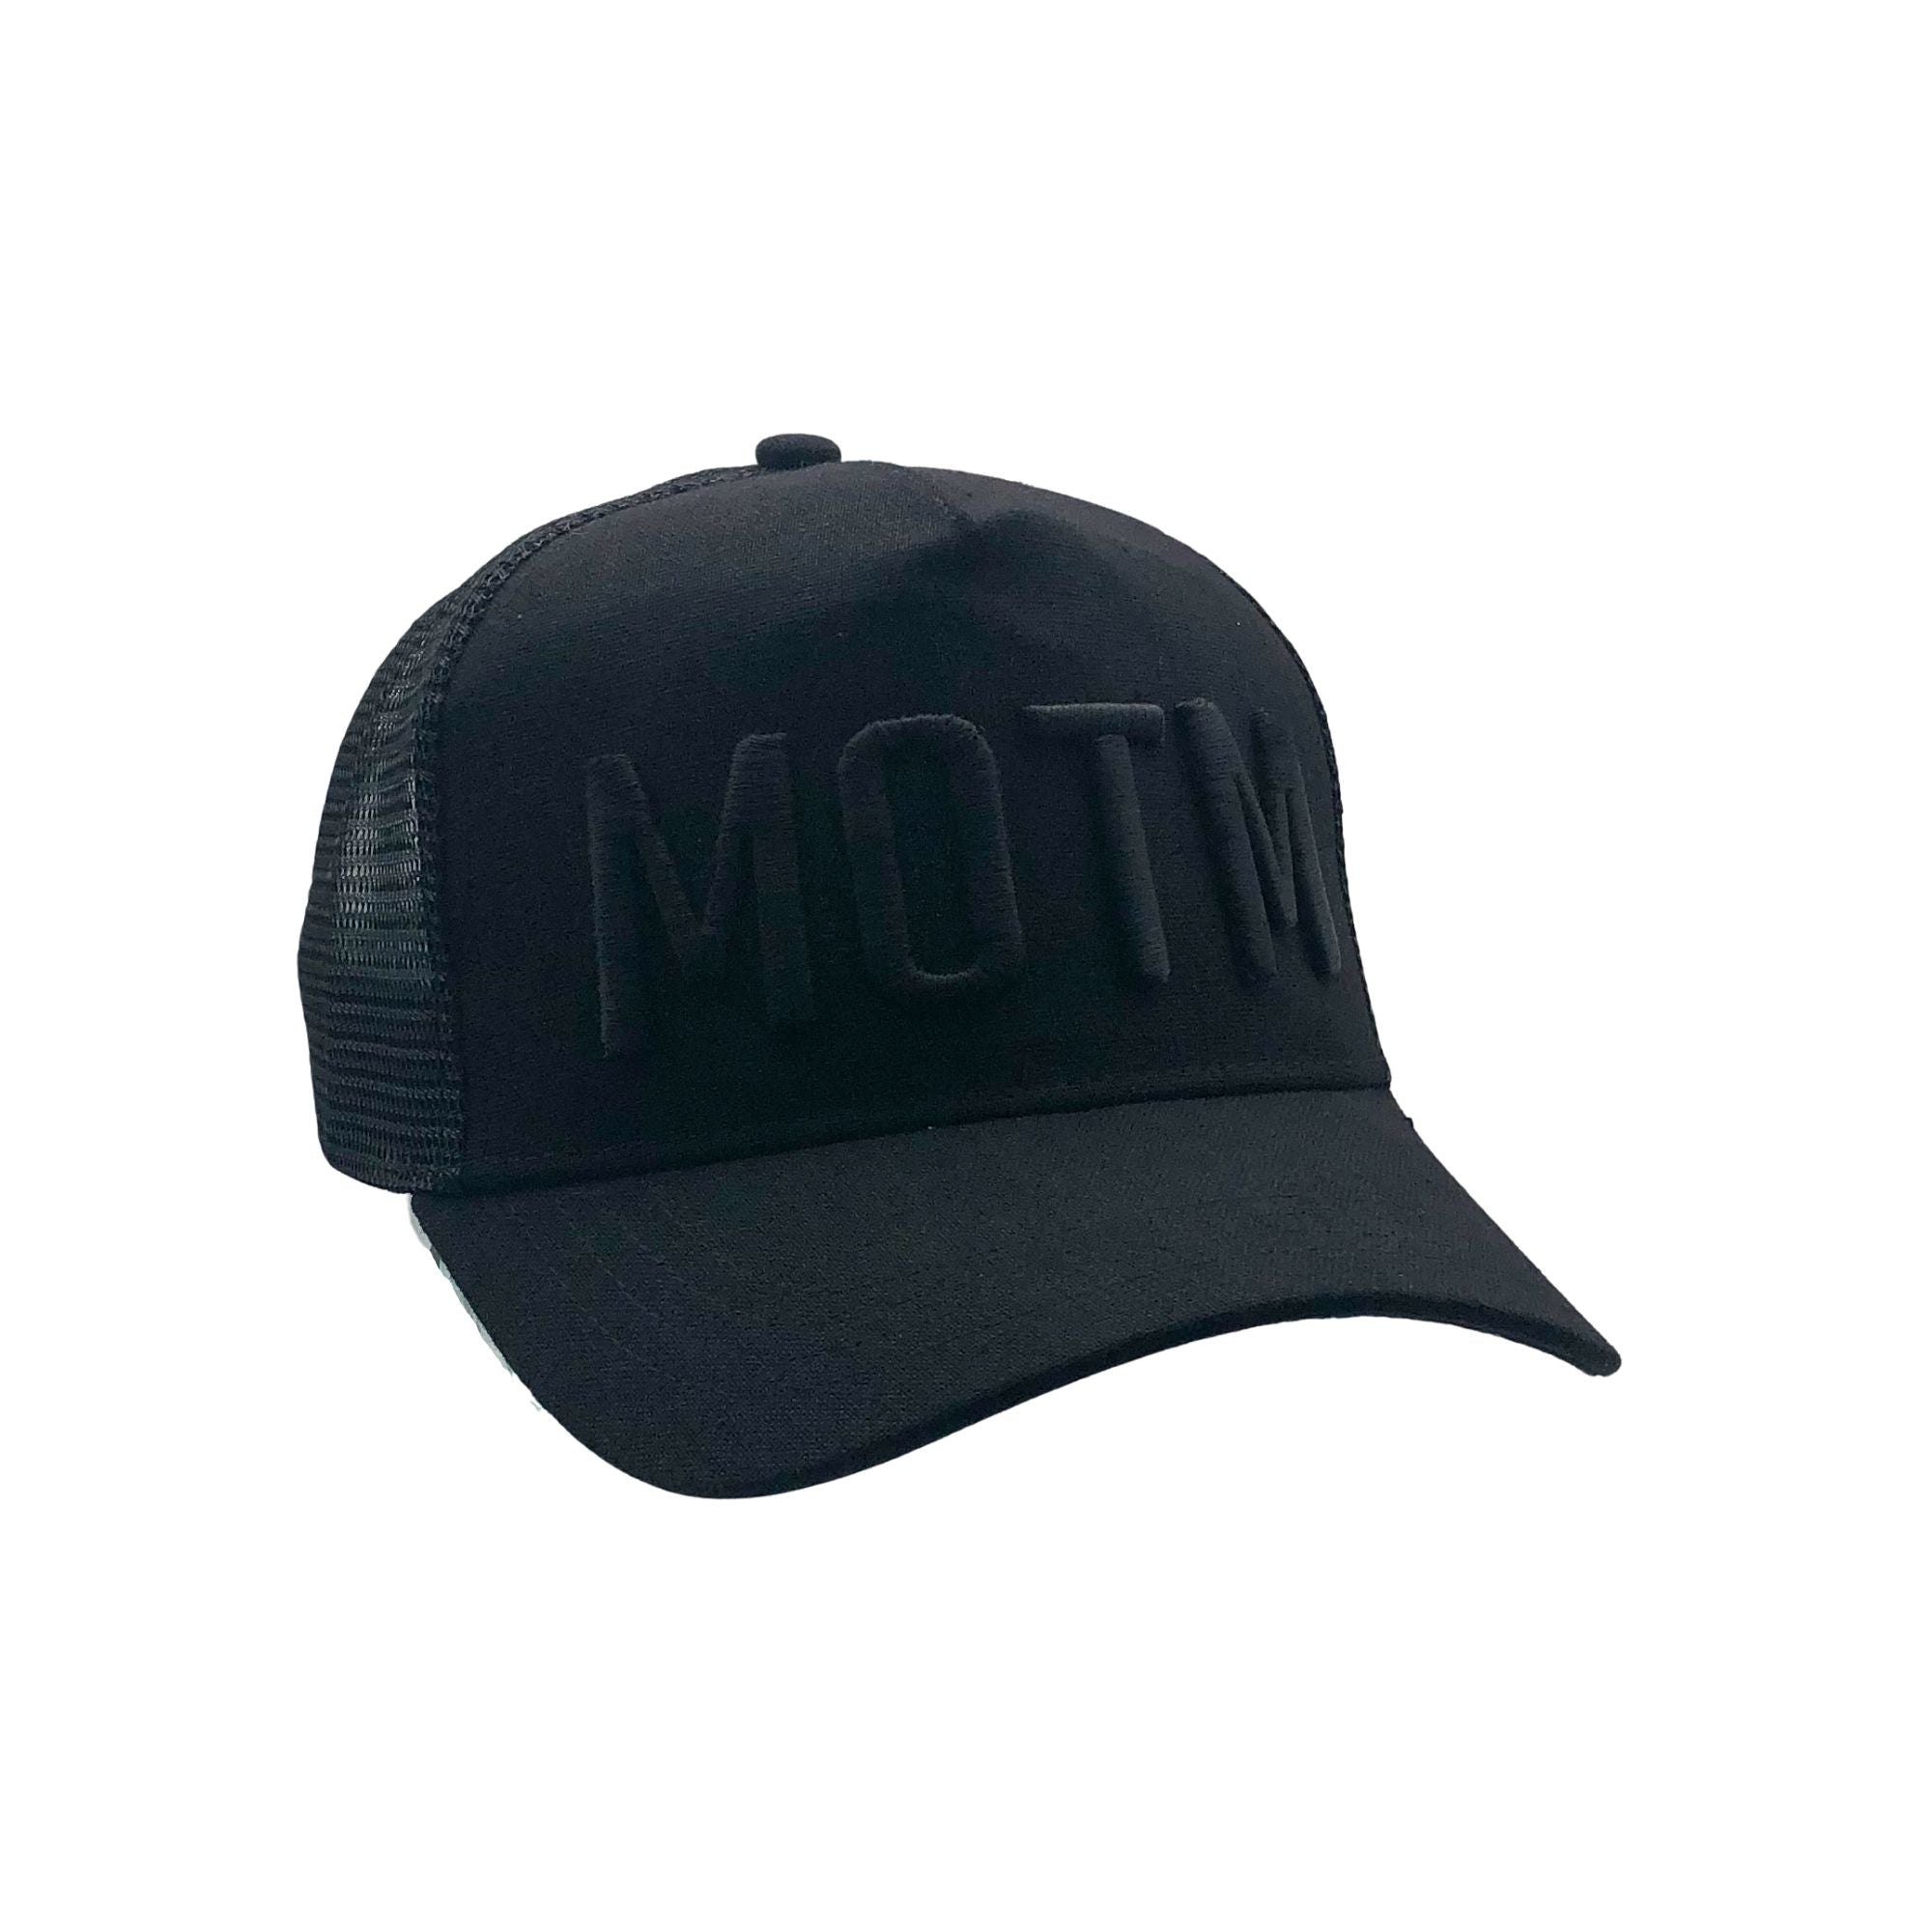 MAN OF THE MATCH® Roberto Carlos Official Cap - MOTM 3D Embroidered Black on Black - Premium Linen